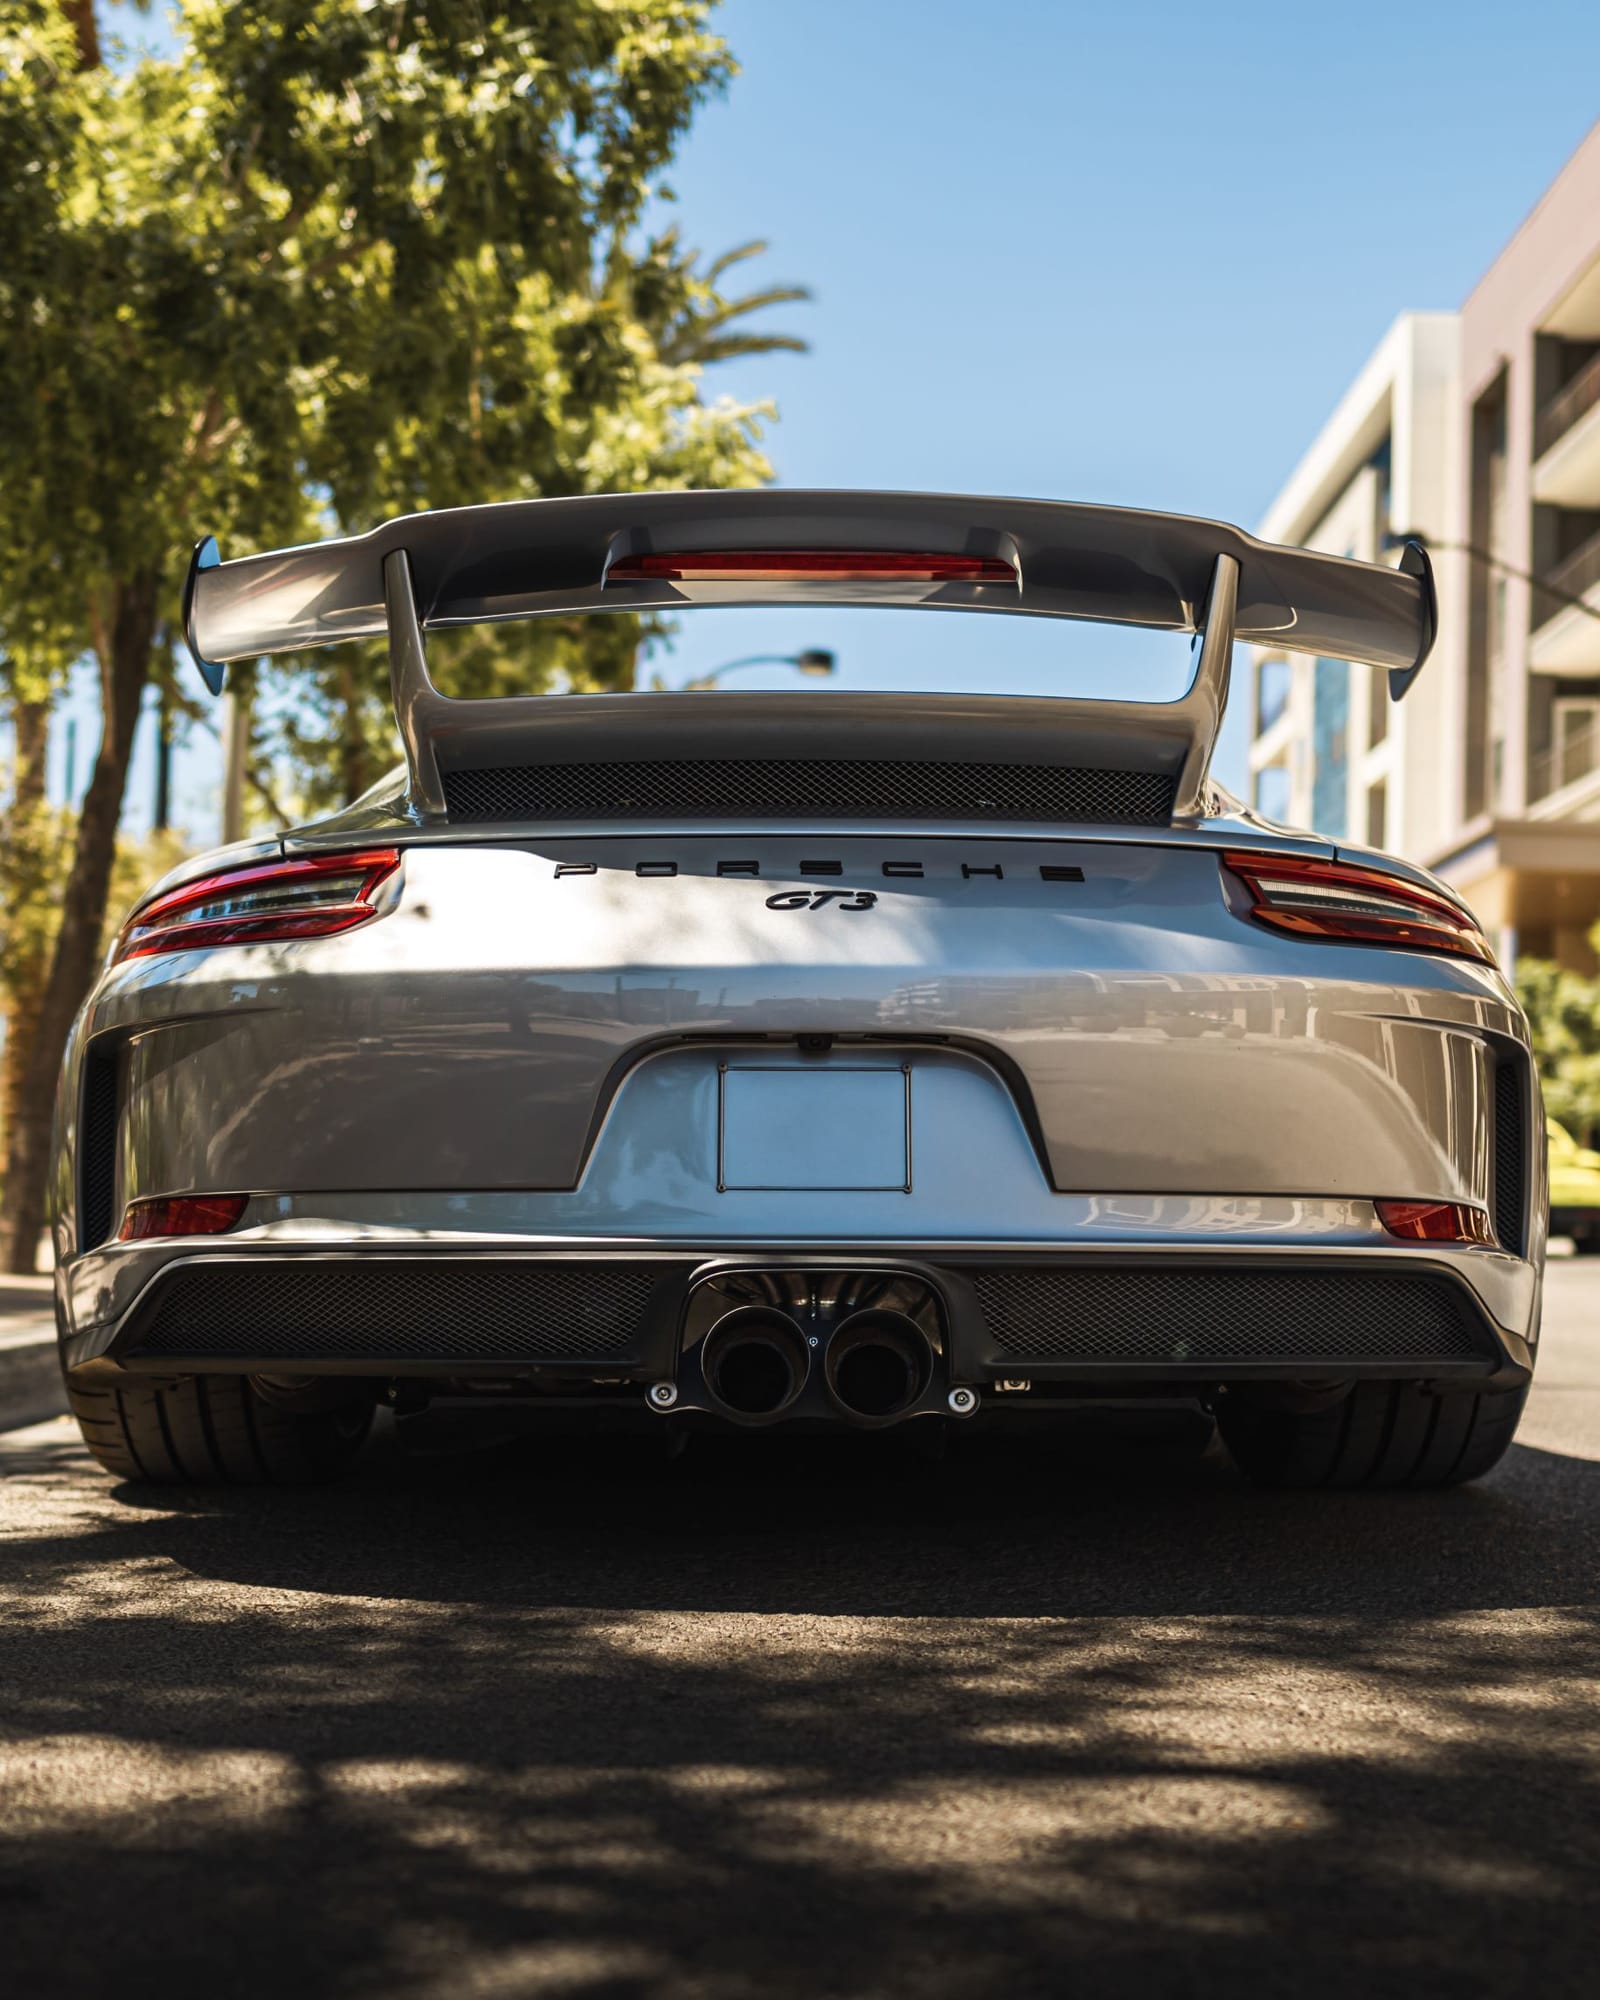 2018 Porsche GT3 - FS: 2018 Porsche GT3 (Manual, Buckets, FAL, etc) - Used - VIN WP0AC2A92JS174291 - 20,500 Miles - 6 cyl - 2WD - Manual - Coupe - Silver - Las Vegas, NV 89141, United States